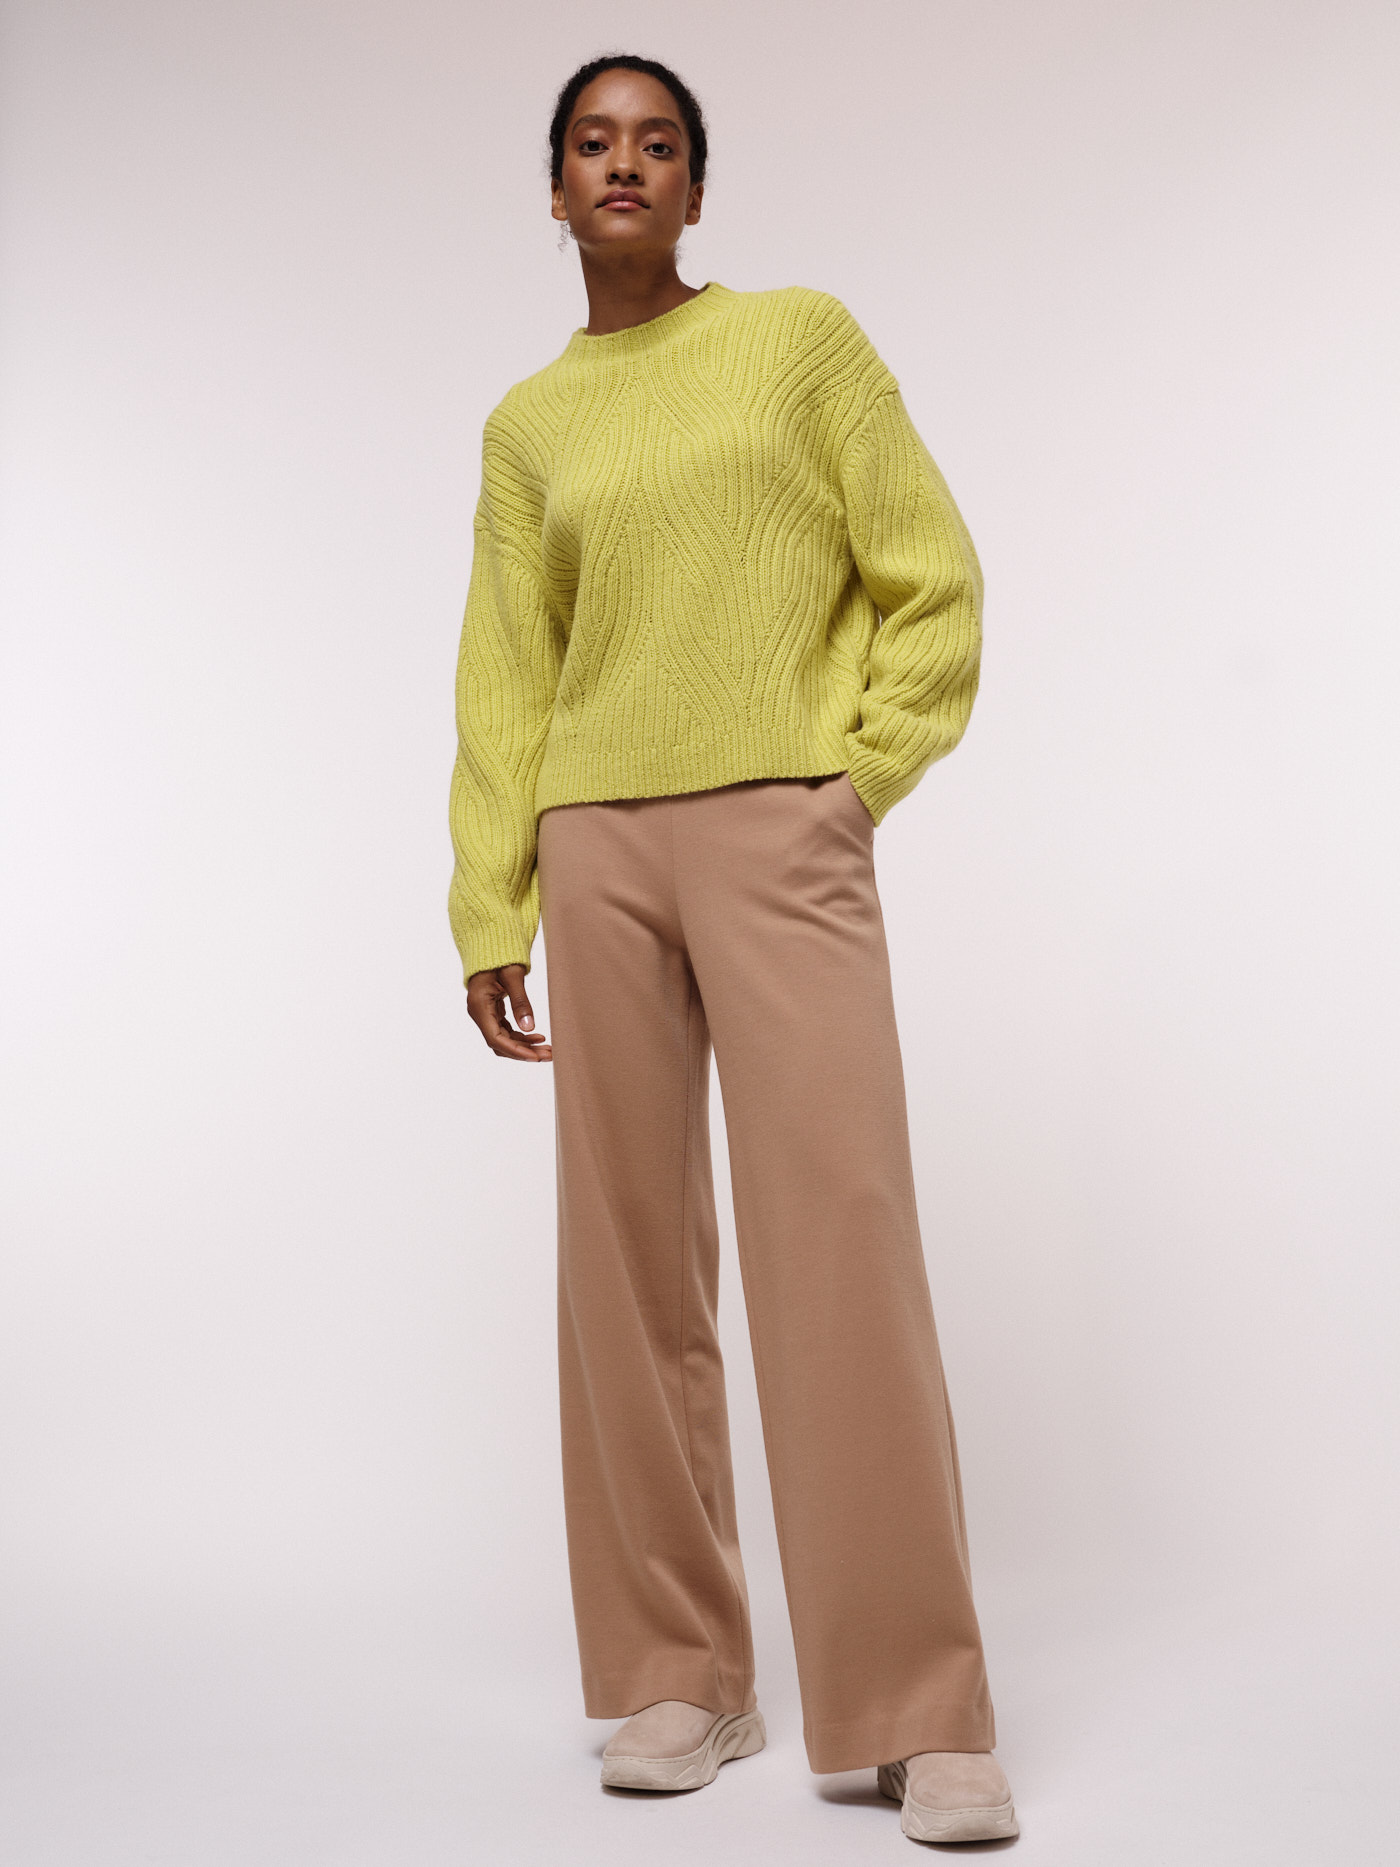 Damen-Pullover mit Rippenzopfmuster neon yellow